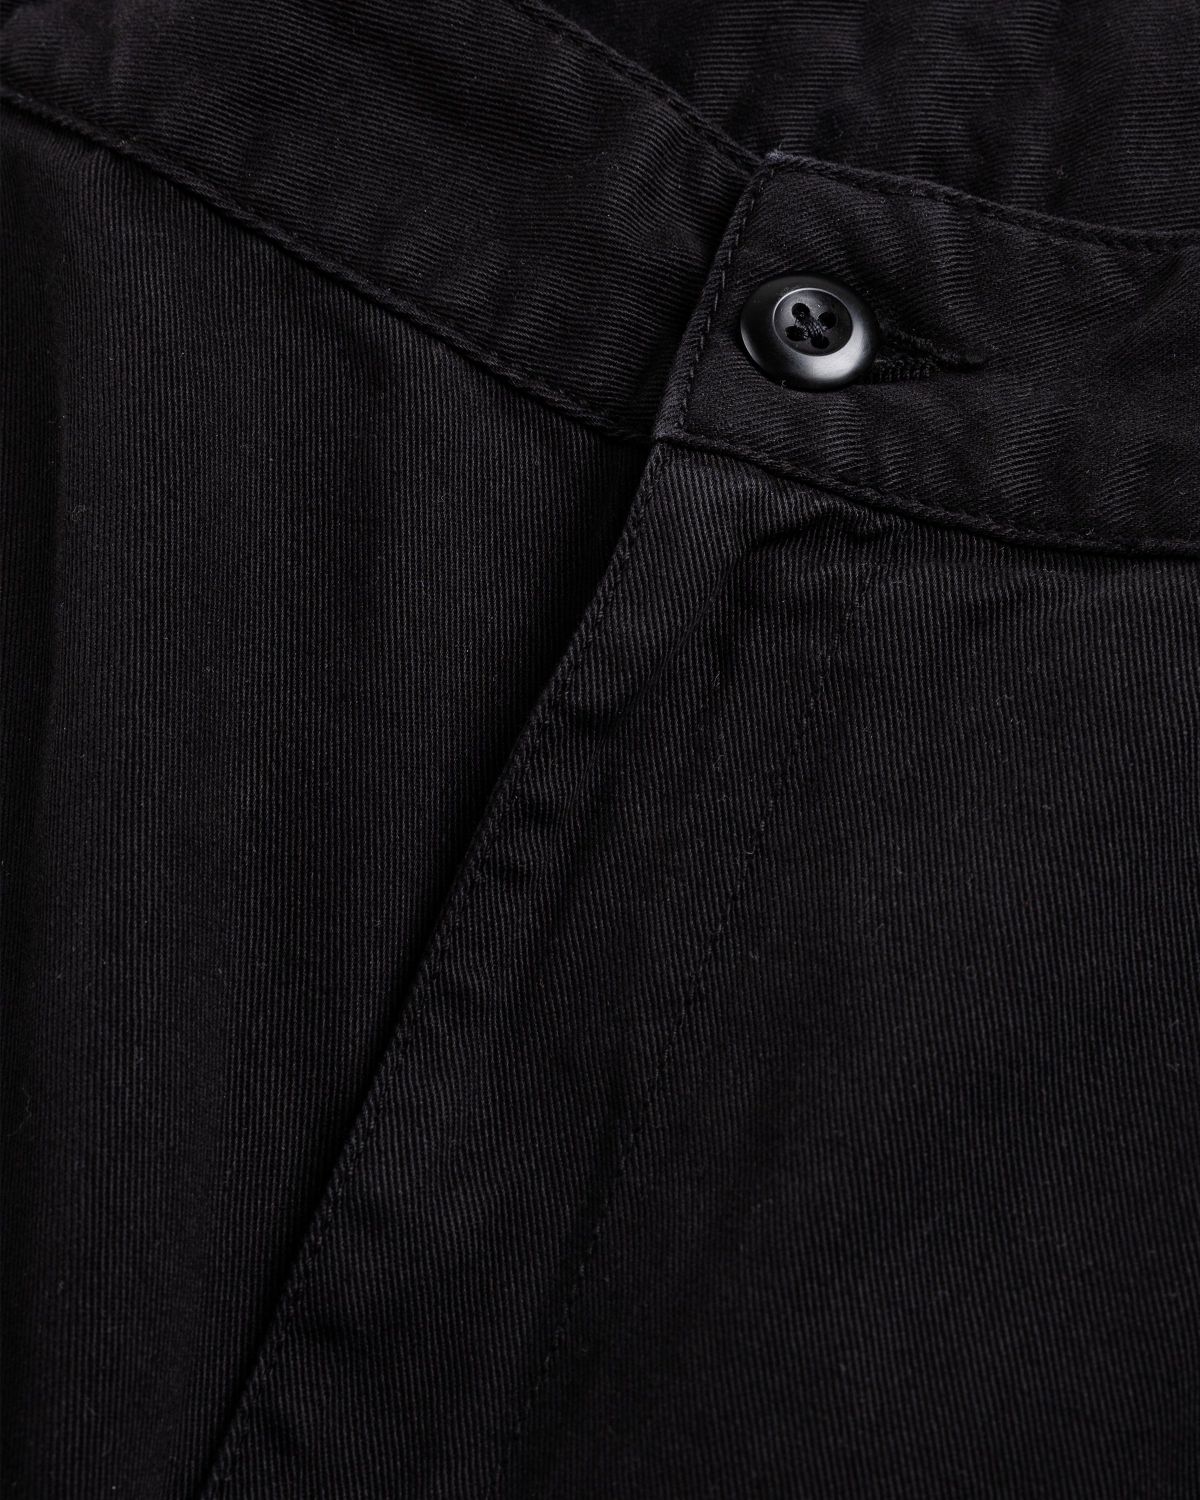 Carhartt WIP – Cole Cargo Short Black - Cargo Shorts - Black - Image 4